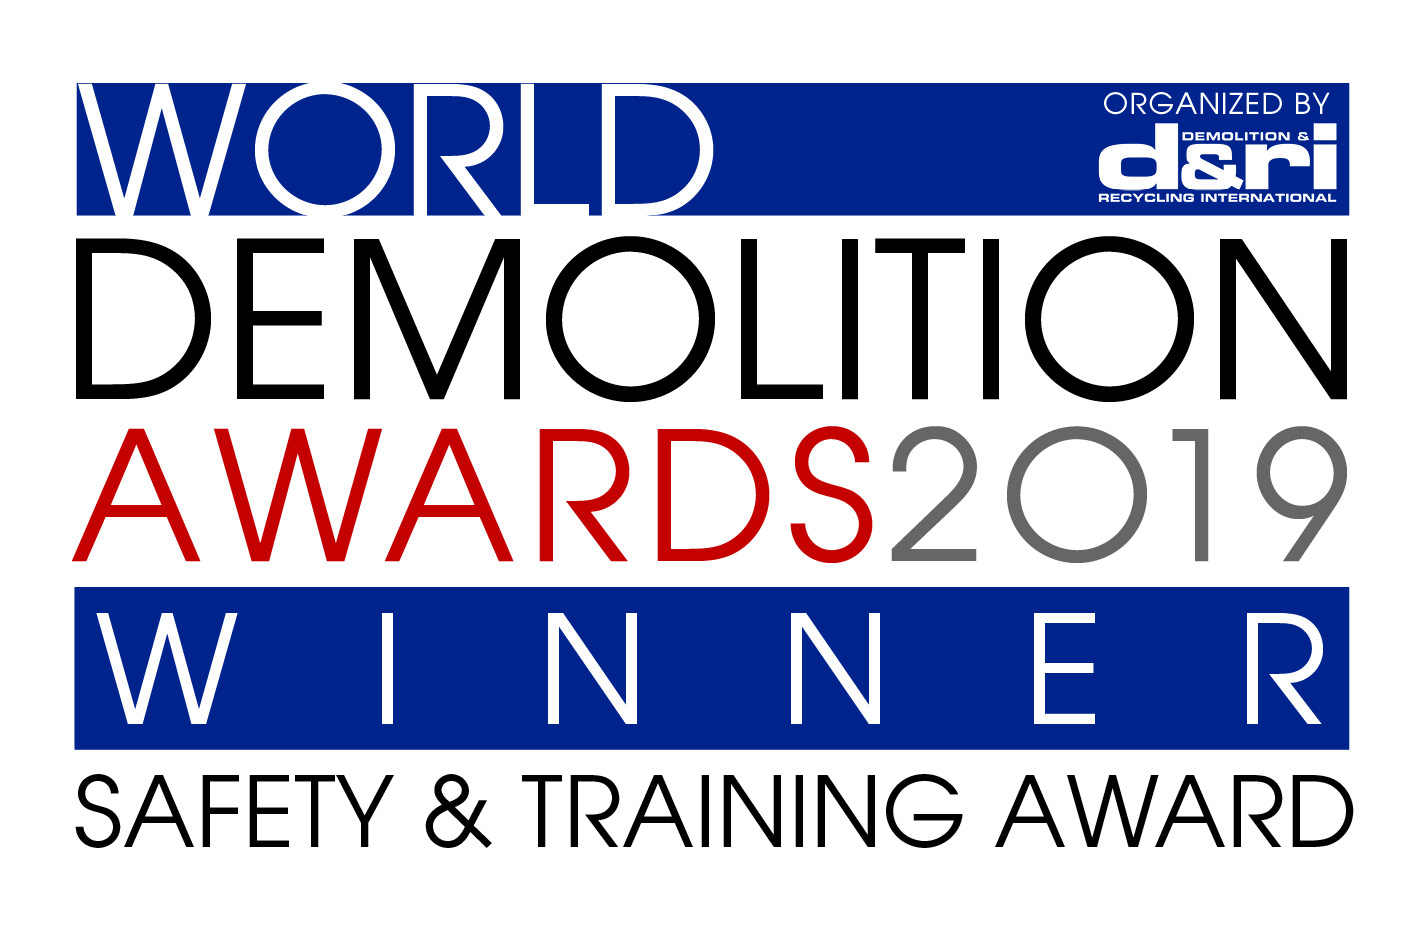 World demolition awards 2019 winner logo. Colemans won this award the safety and training award.